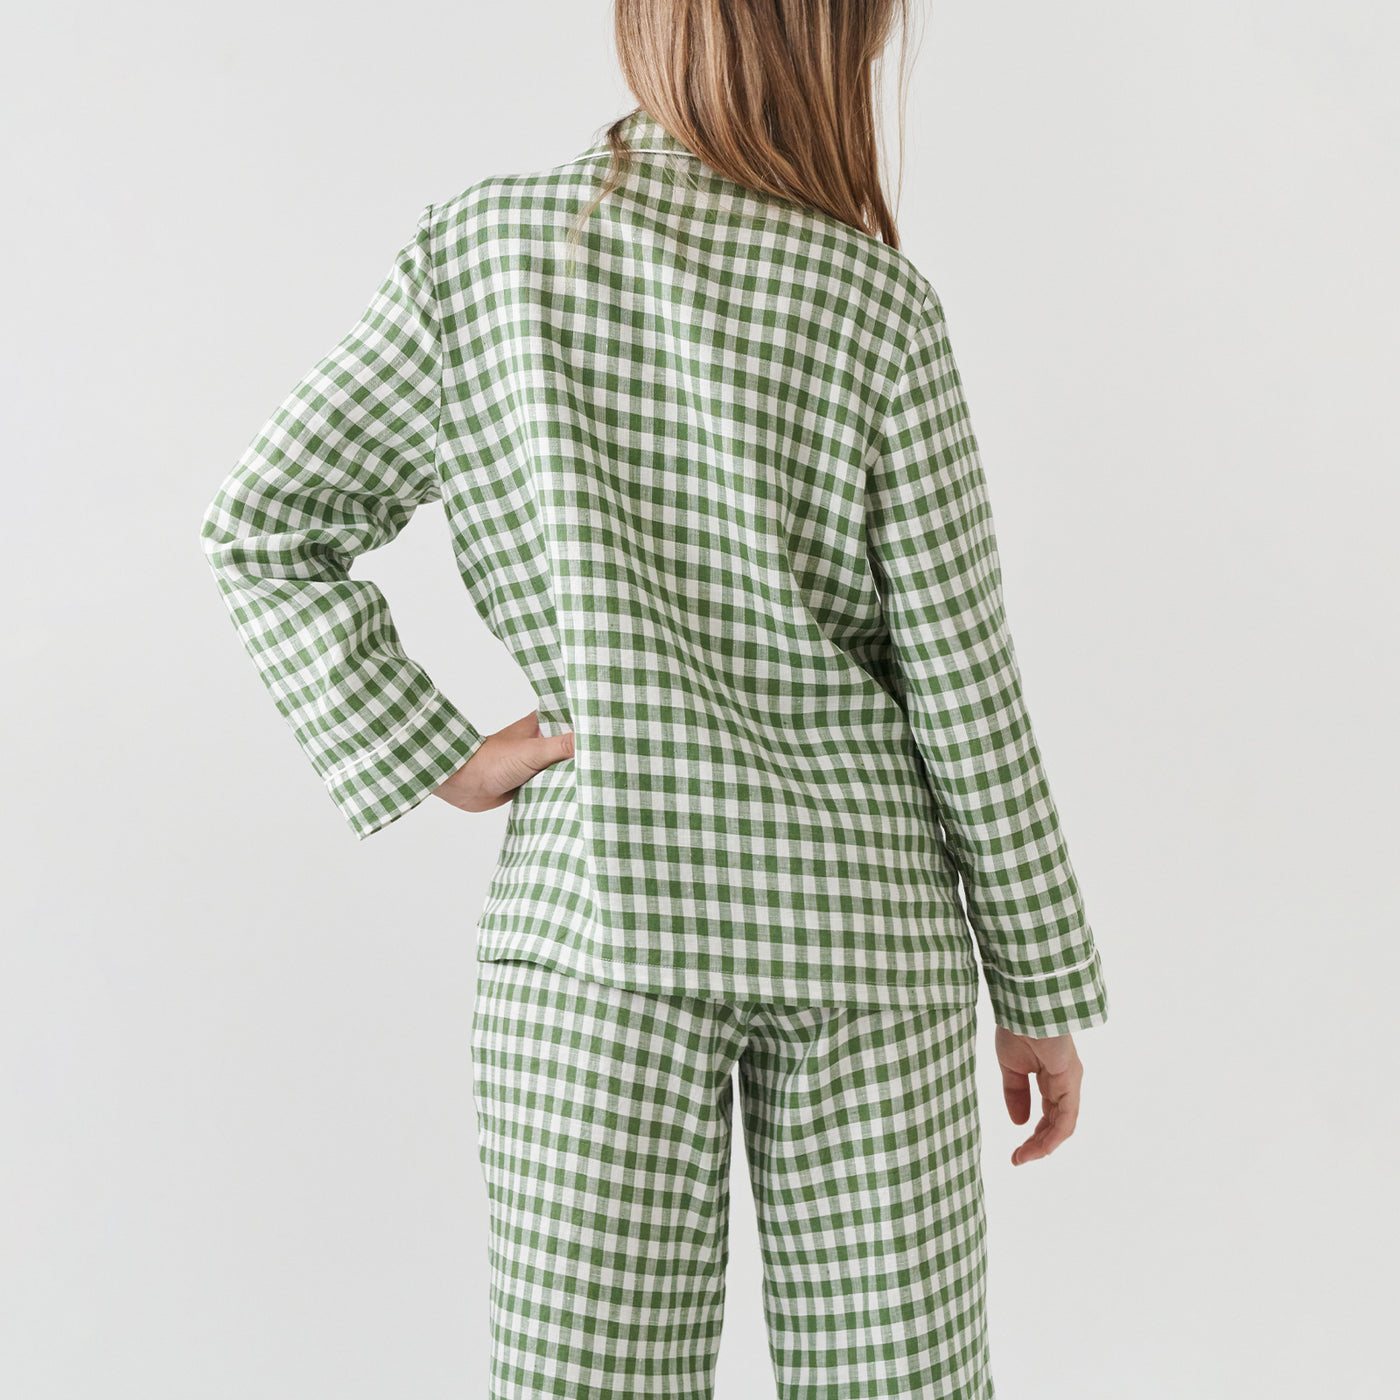 MIVY Pajama Bottoms For Women,Womens Pyjama Sets 2 Piece Creative